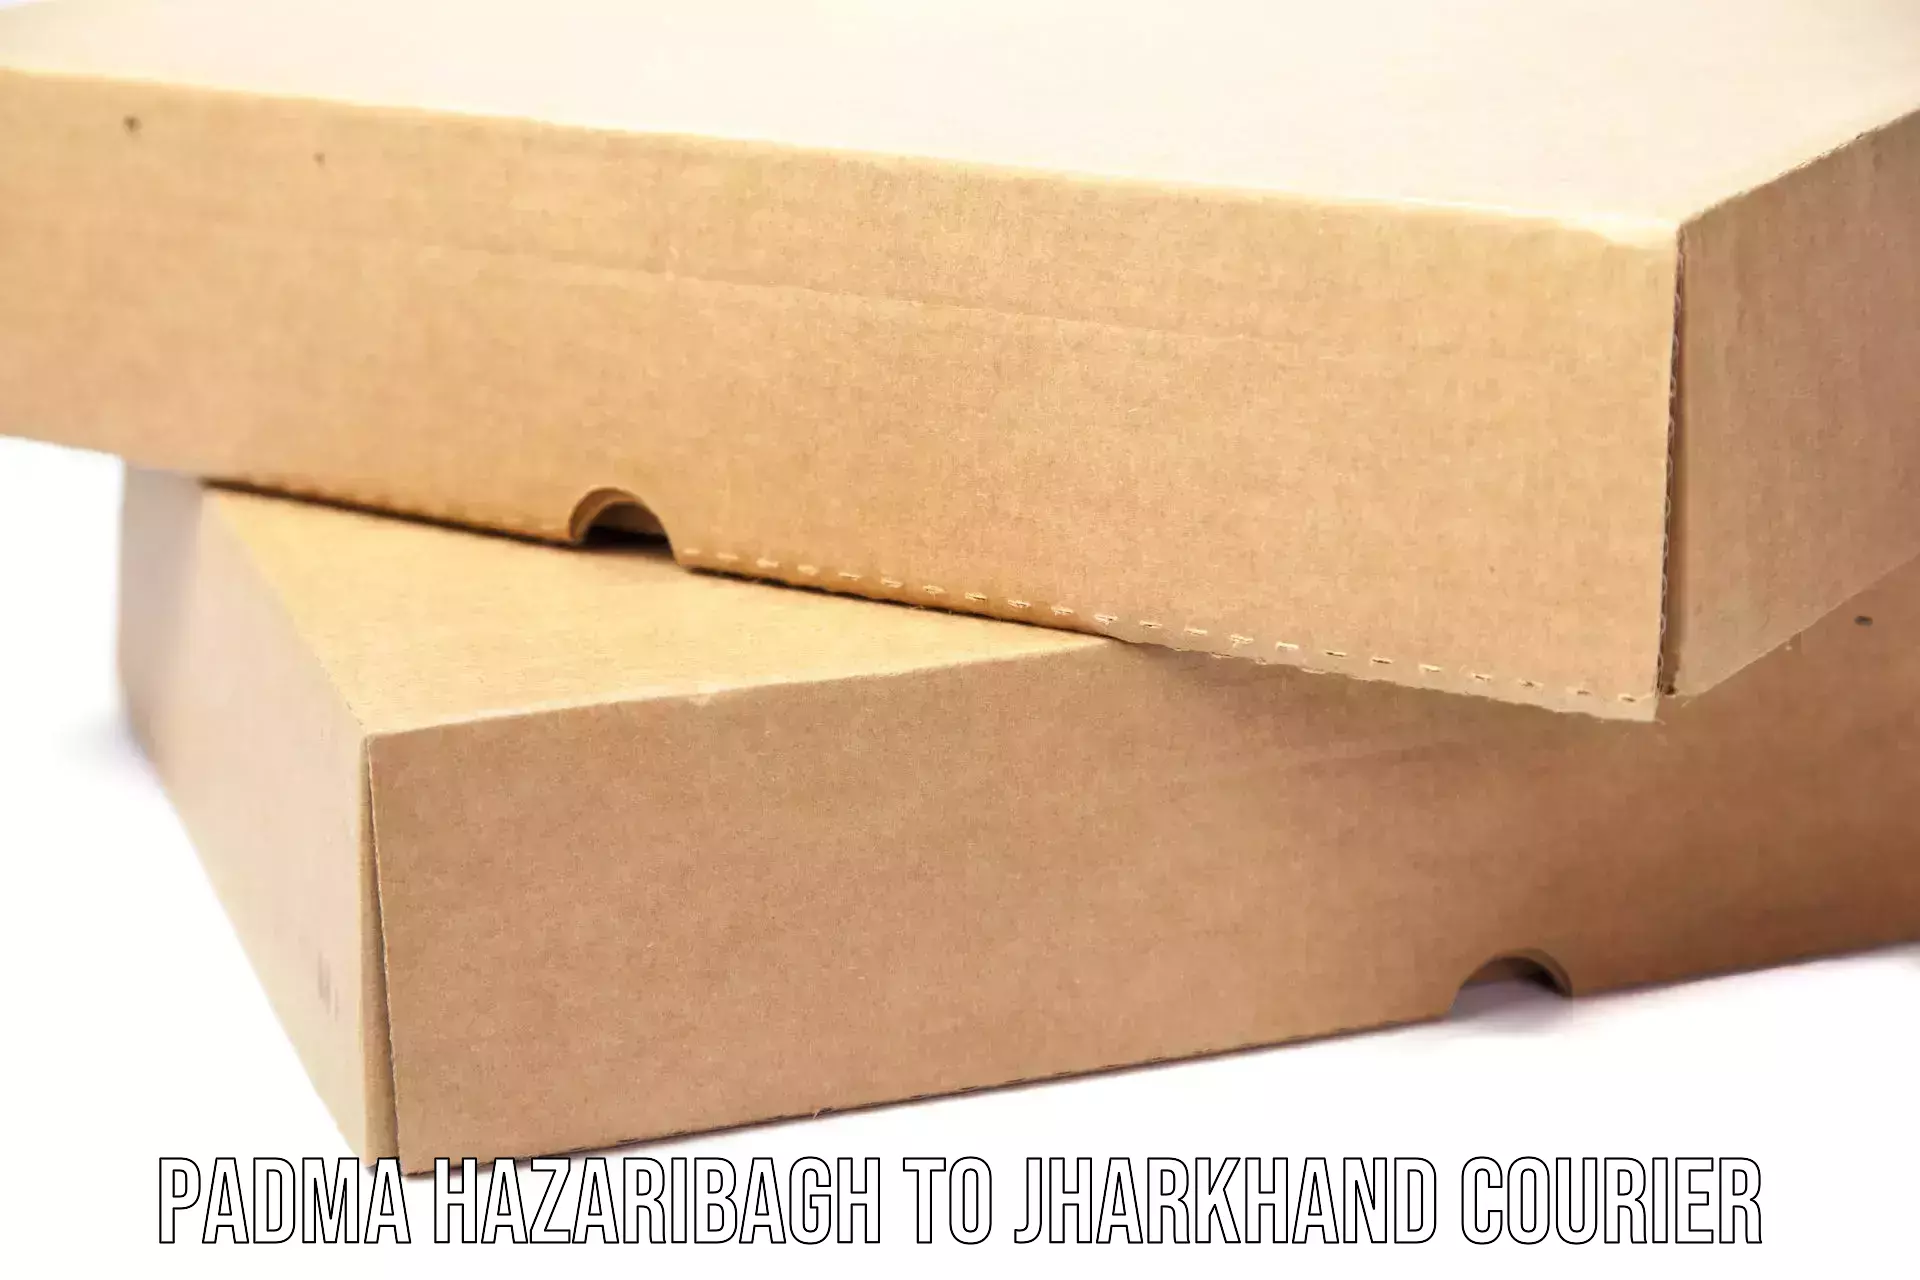 Business shipping needs Padma Hazaribagh to Jharkhand